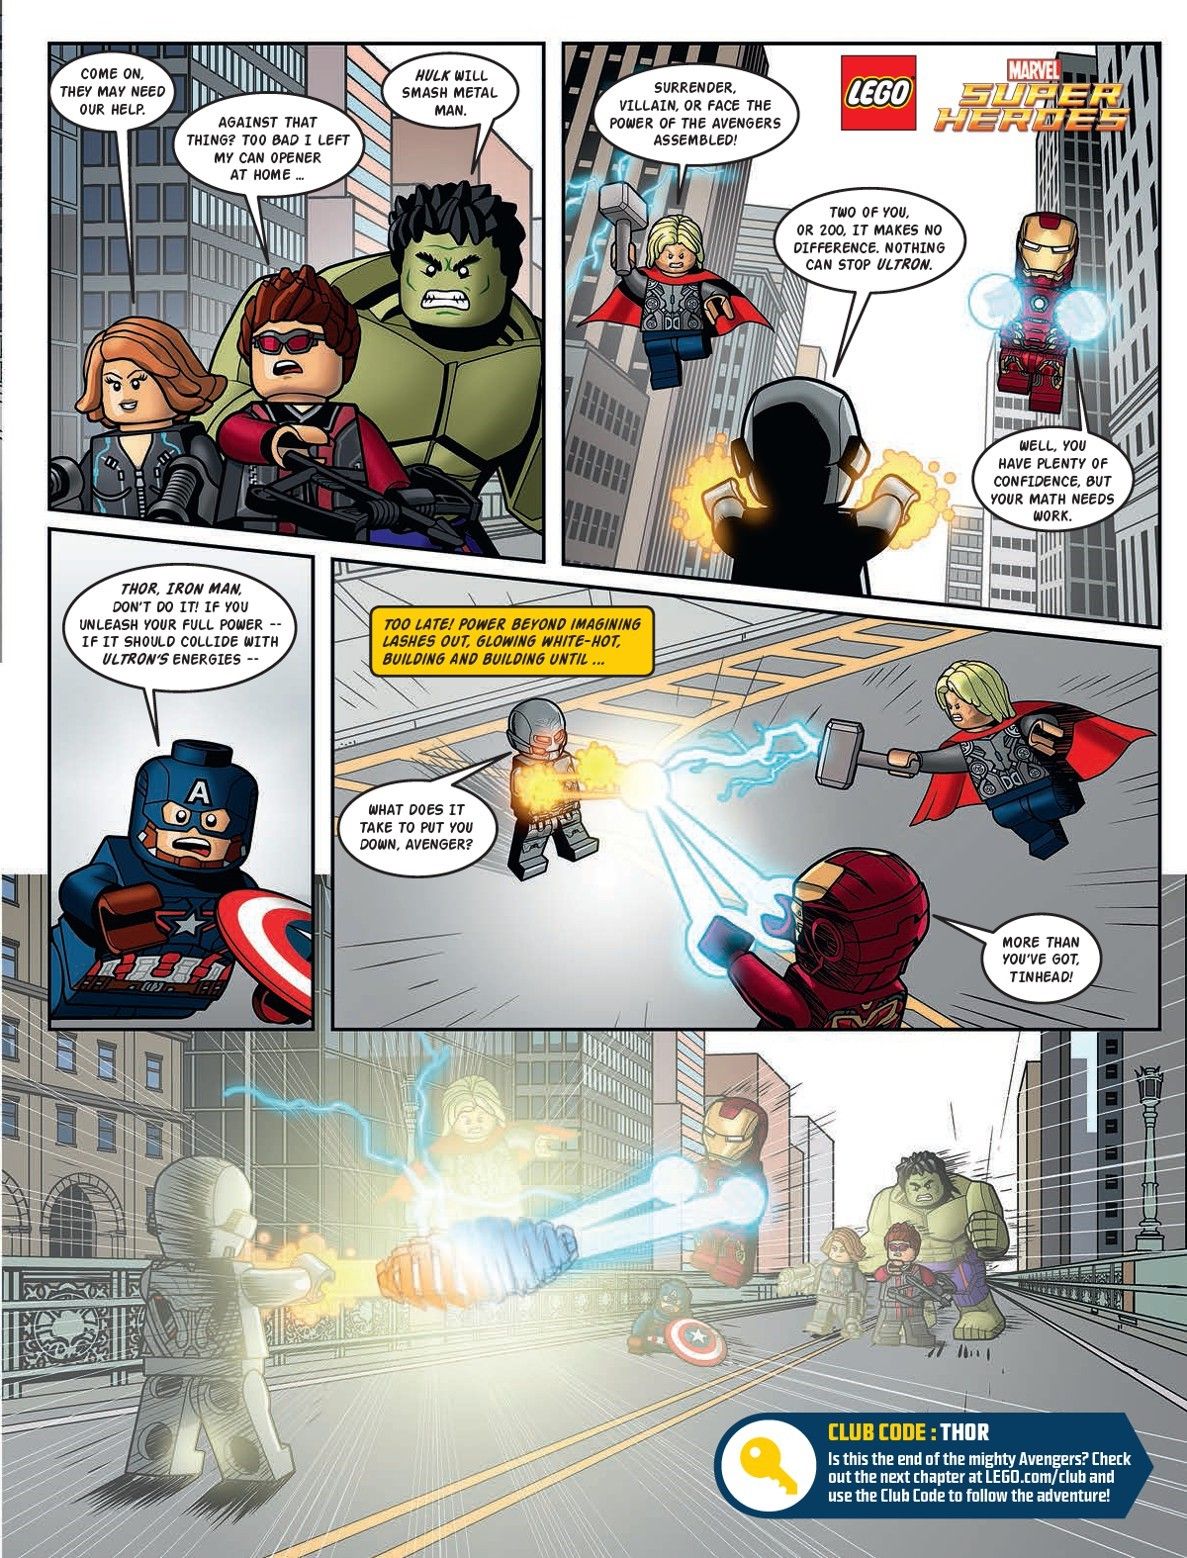 Avengers: Age of Ultron Lego Comic Book 3